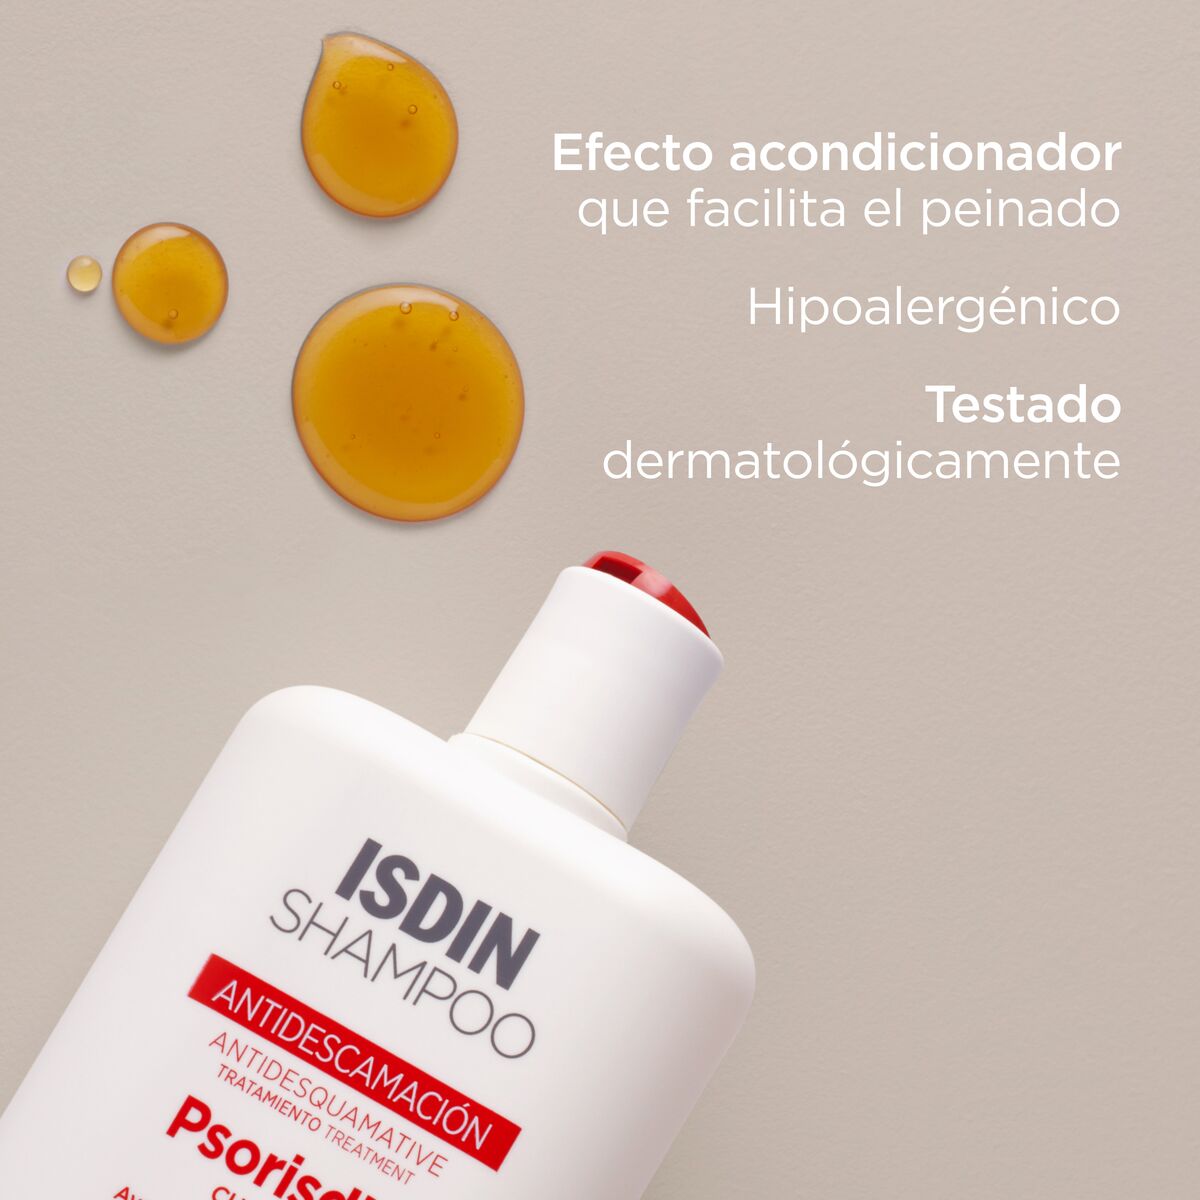 Menagerry juez crisantemo ISDIN Shampoo Antidescamación Psorisdin Champú | ISDIN